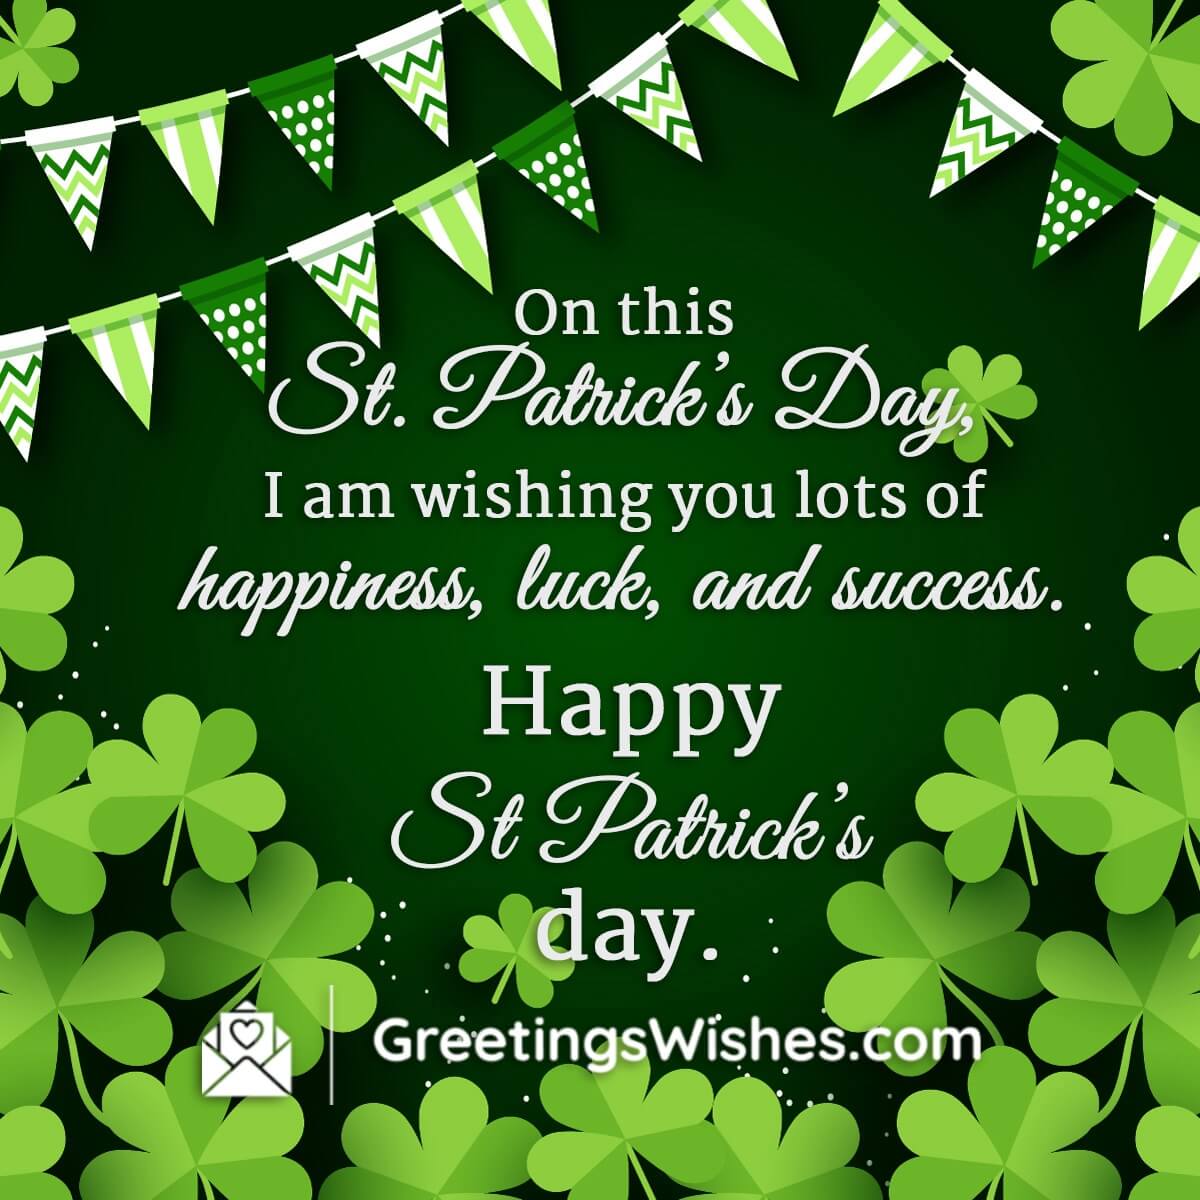 Happy St. Patrick’s Day Wish